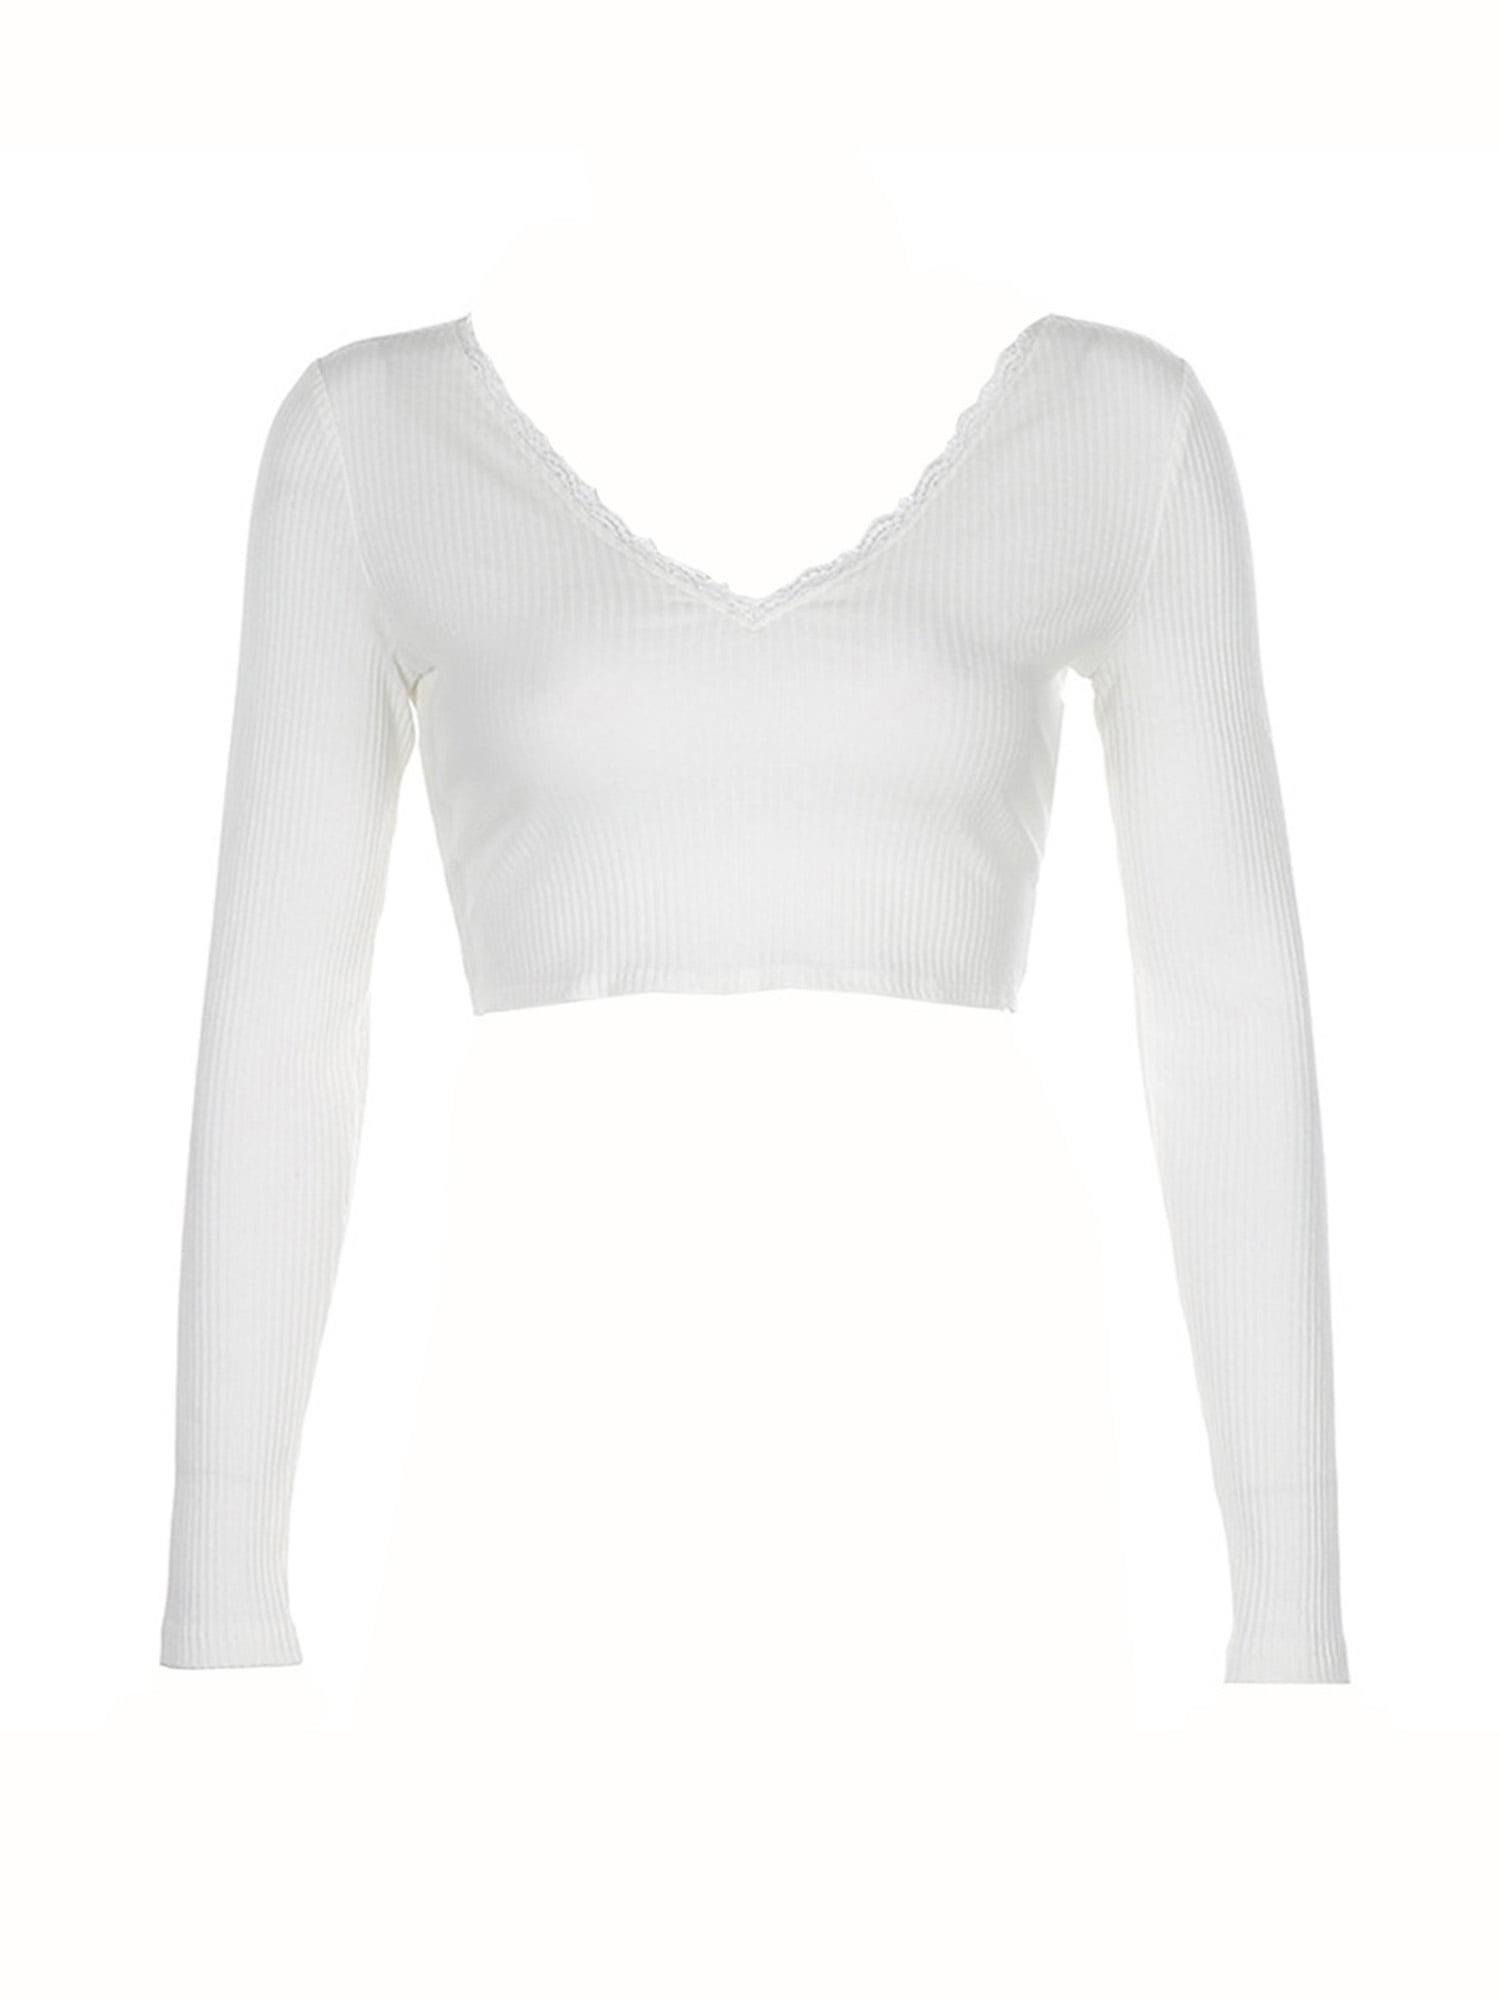 Douhoow Women White T-Shirts V Neck Long Sleeve Bandage Knitted Crop ...